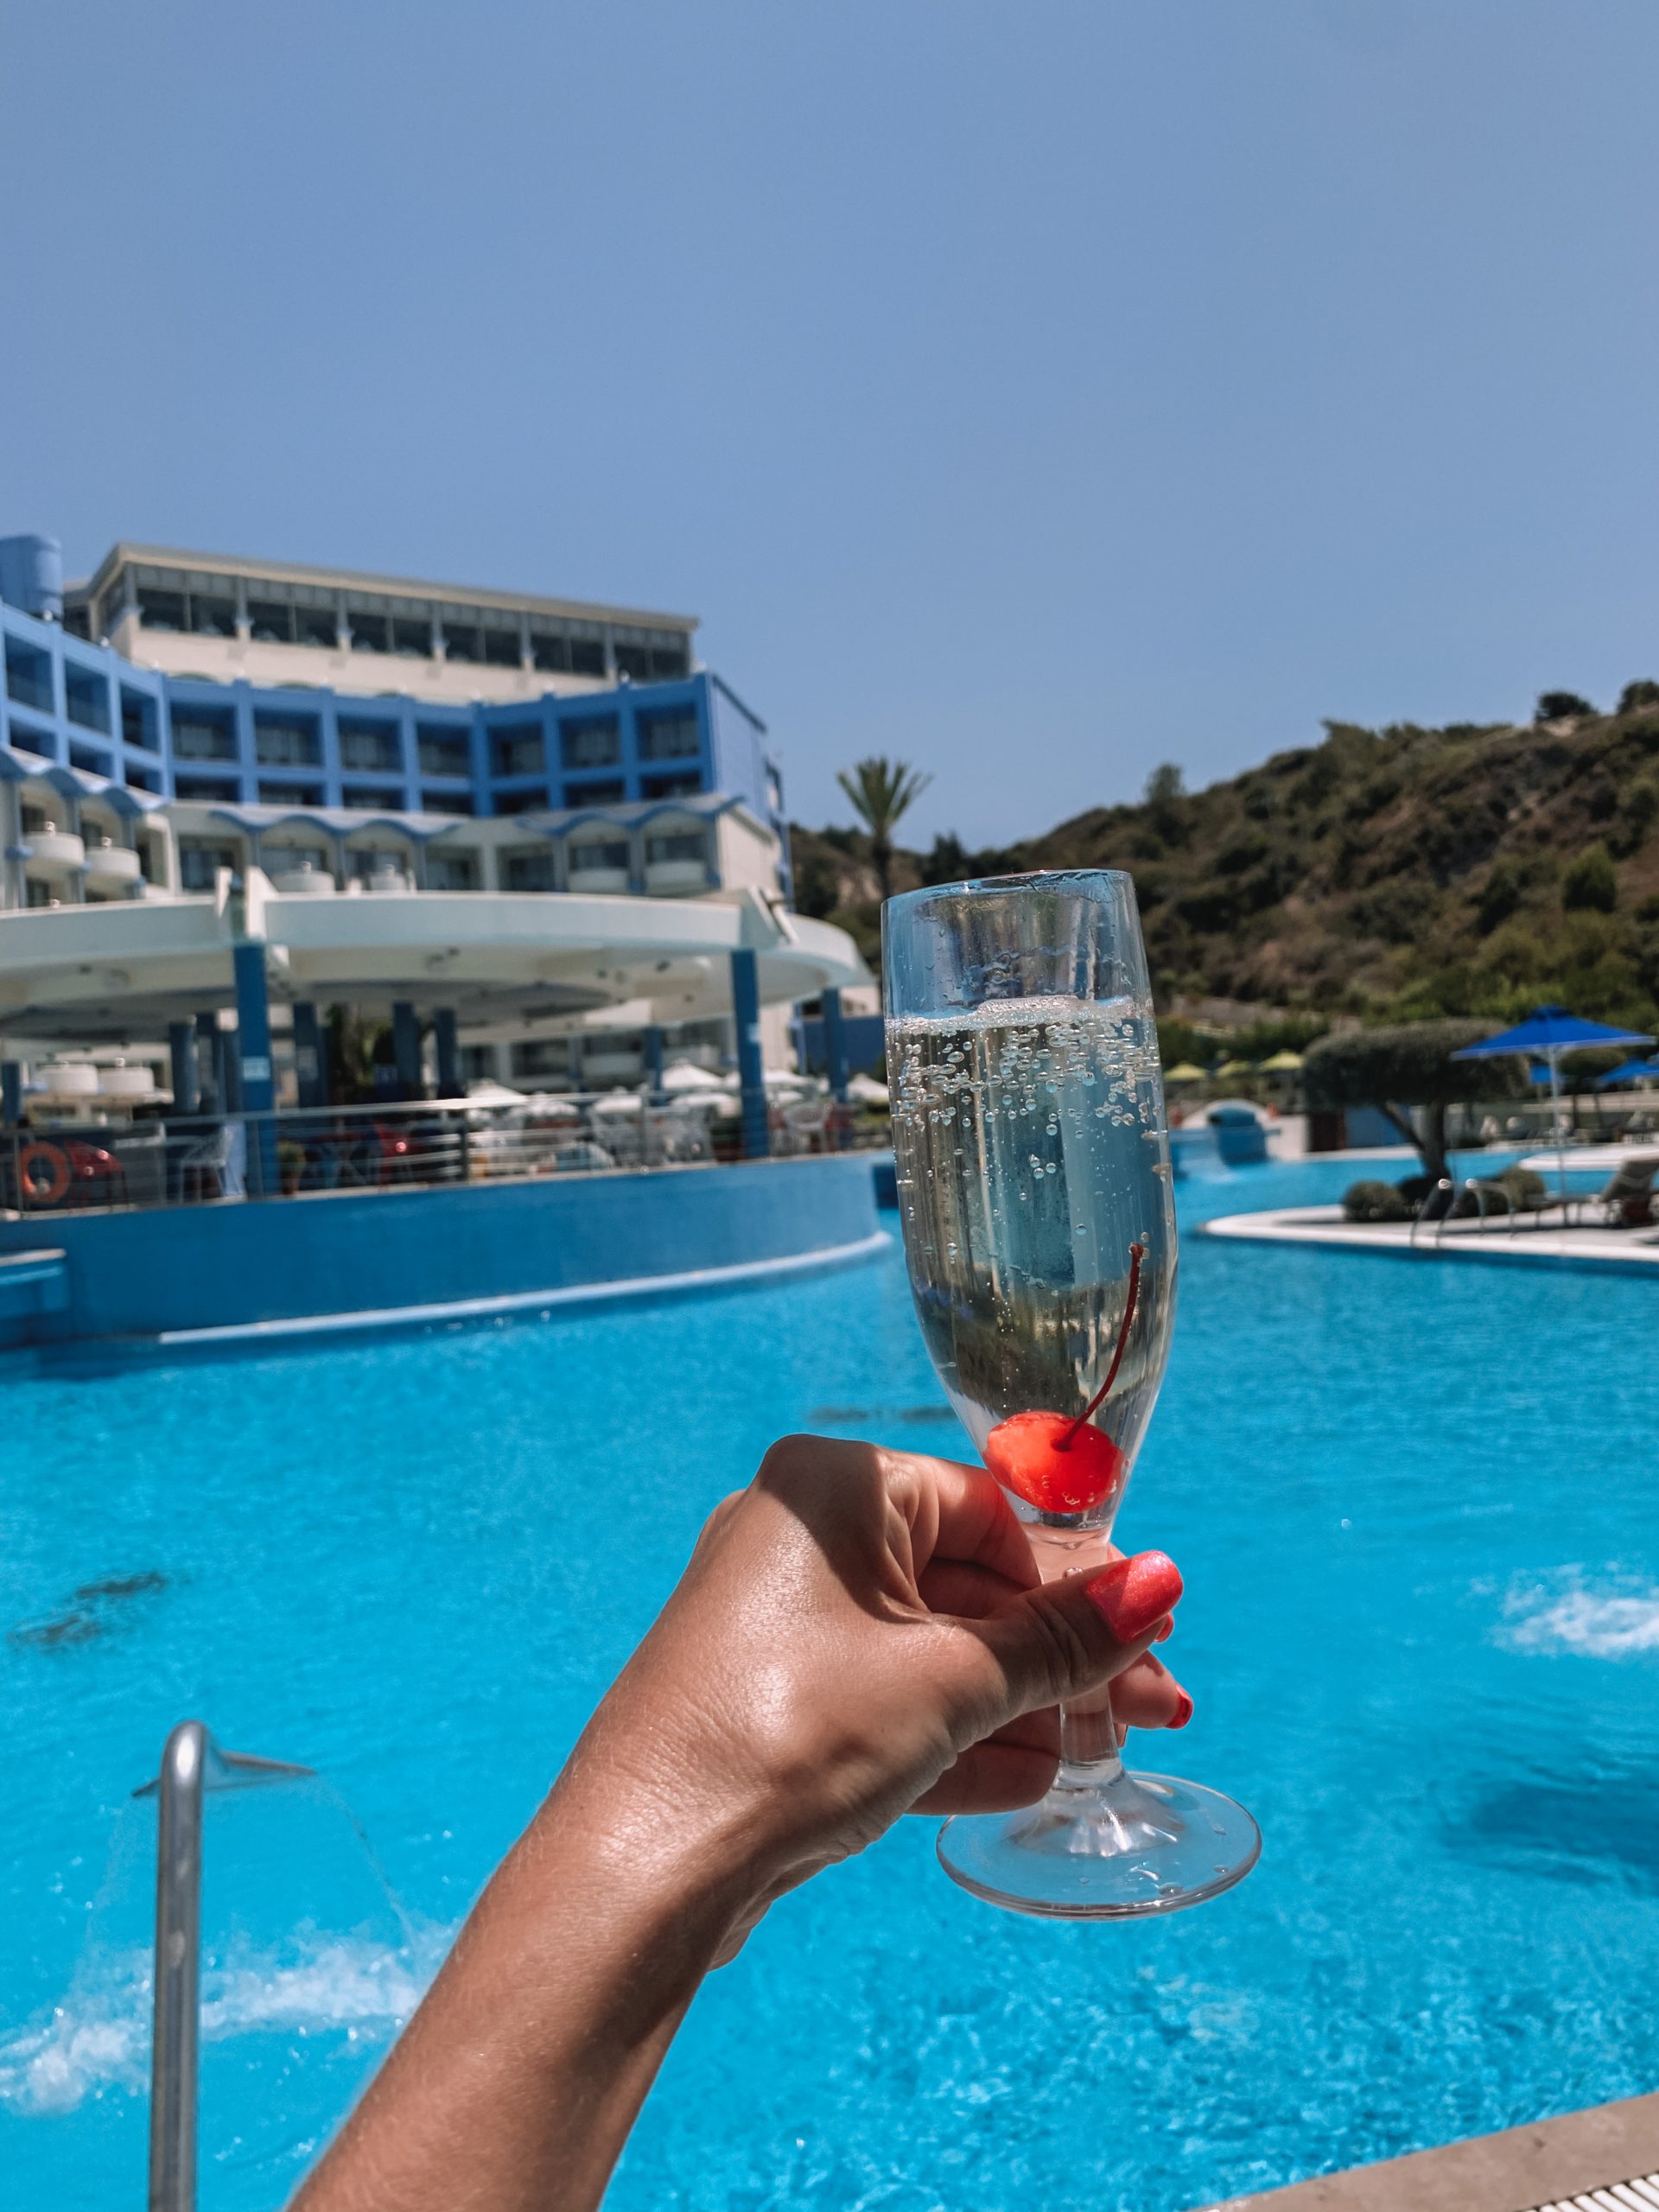 Holiday in Rhodes, Greece. Atrium Hotels. Atrium Platinum Resort Hotel & Spa. Best Hotels in Rhodes | Cocktail Rotonda Pool Bar in Atrium Platinum Hotel